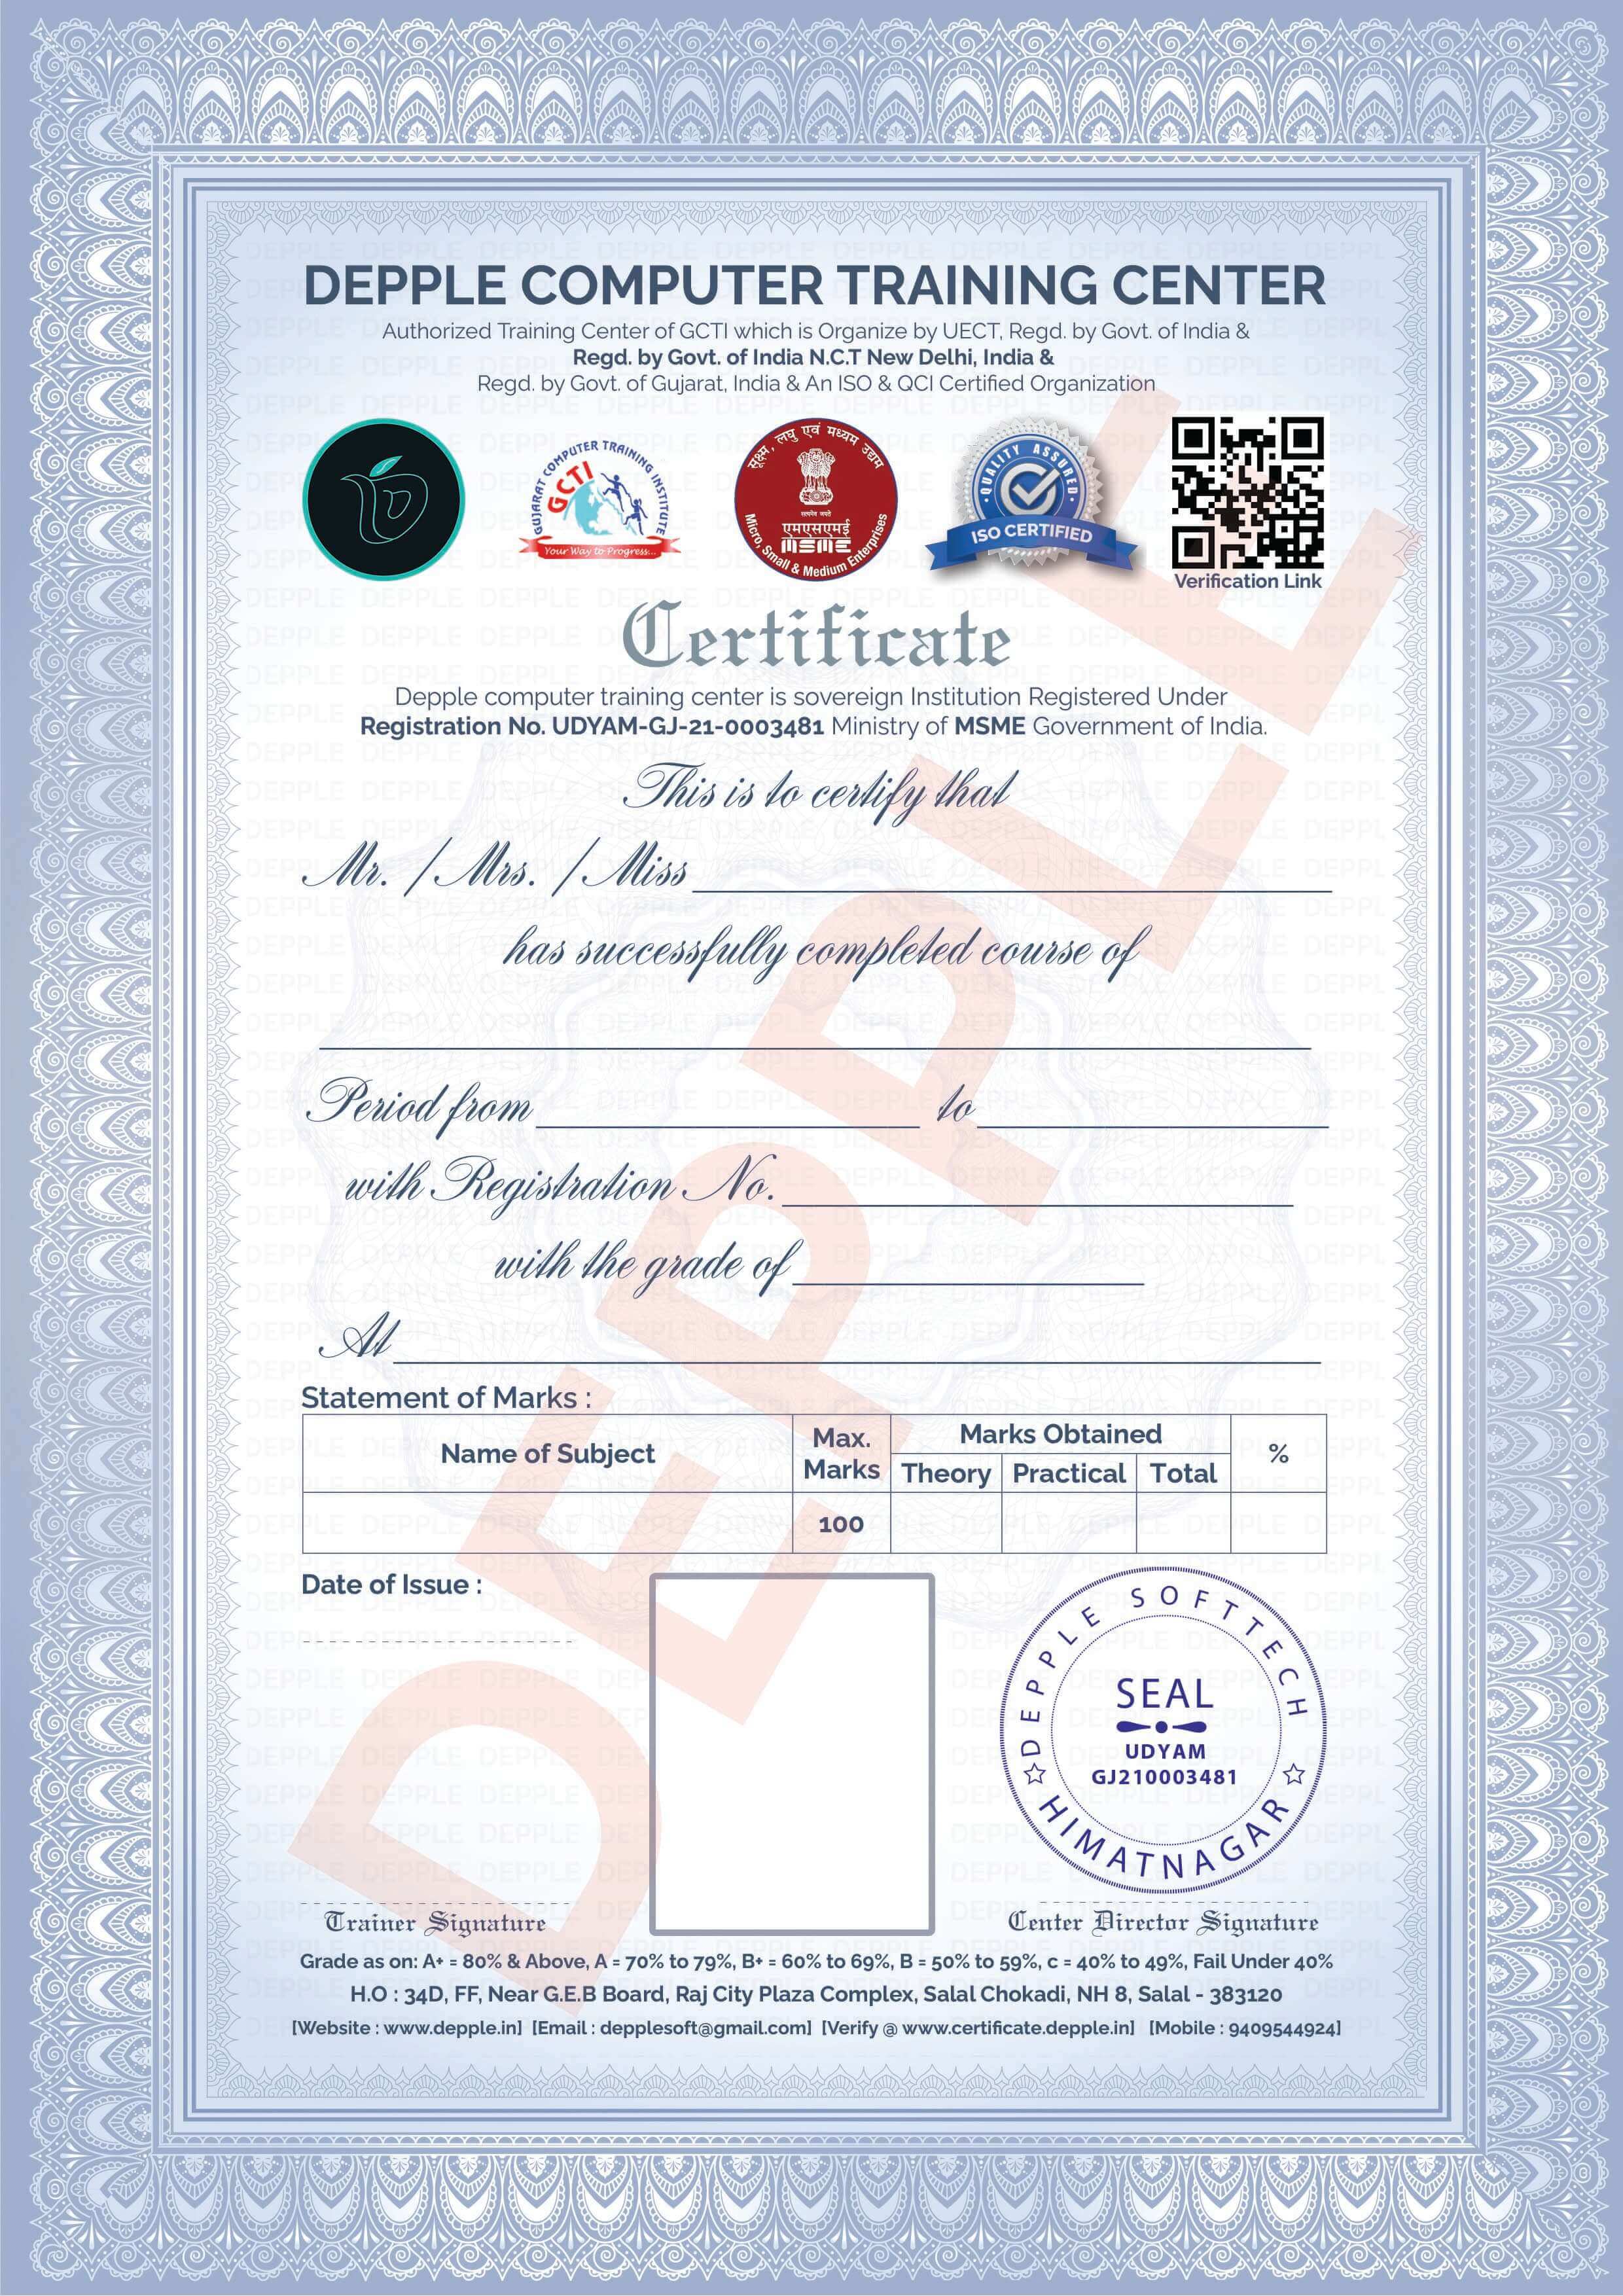 Depple Training Certificate